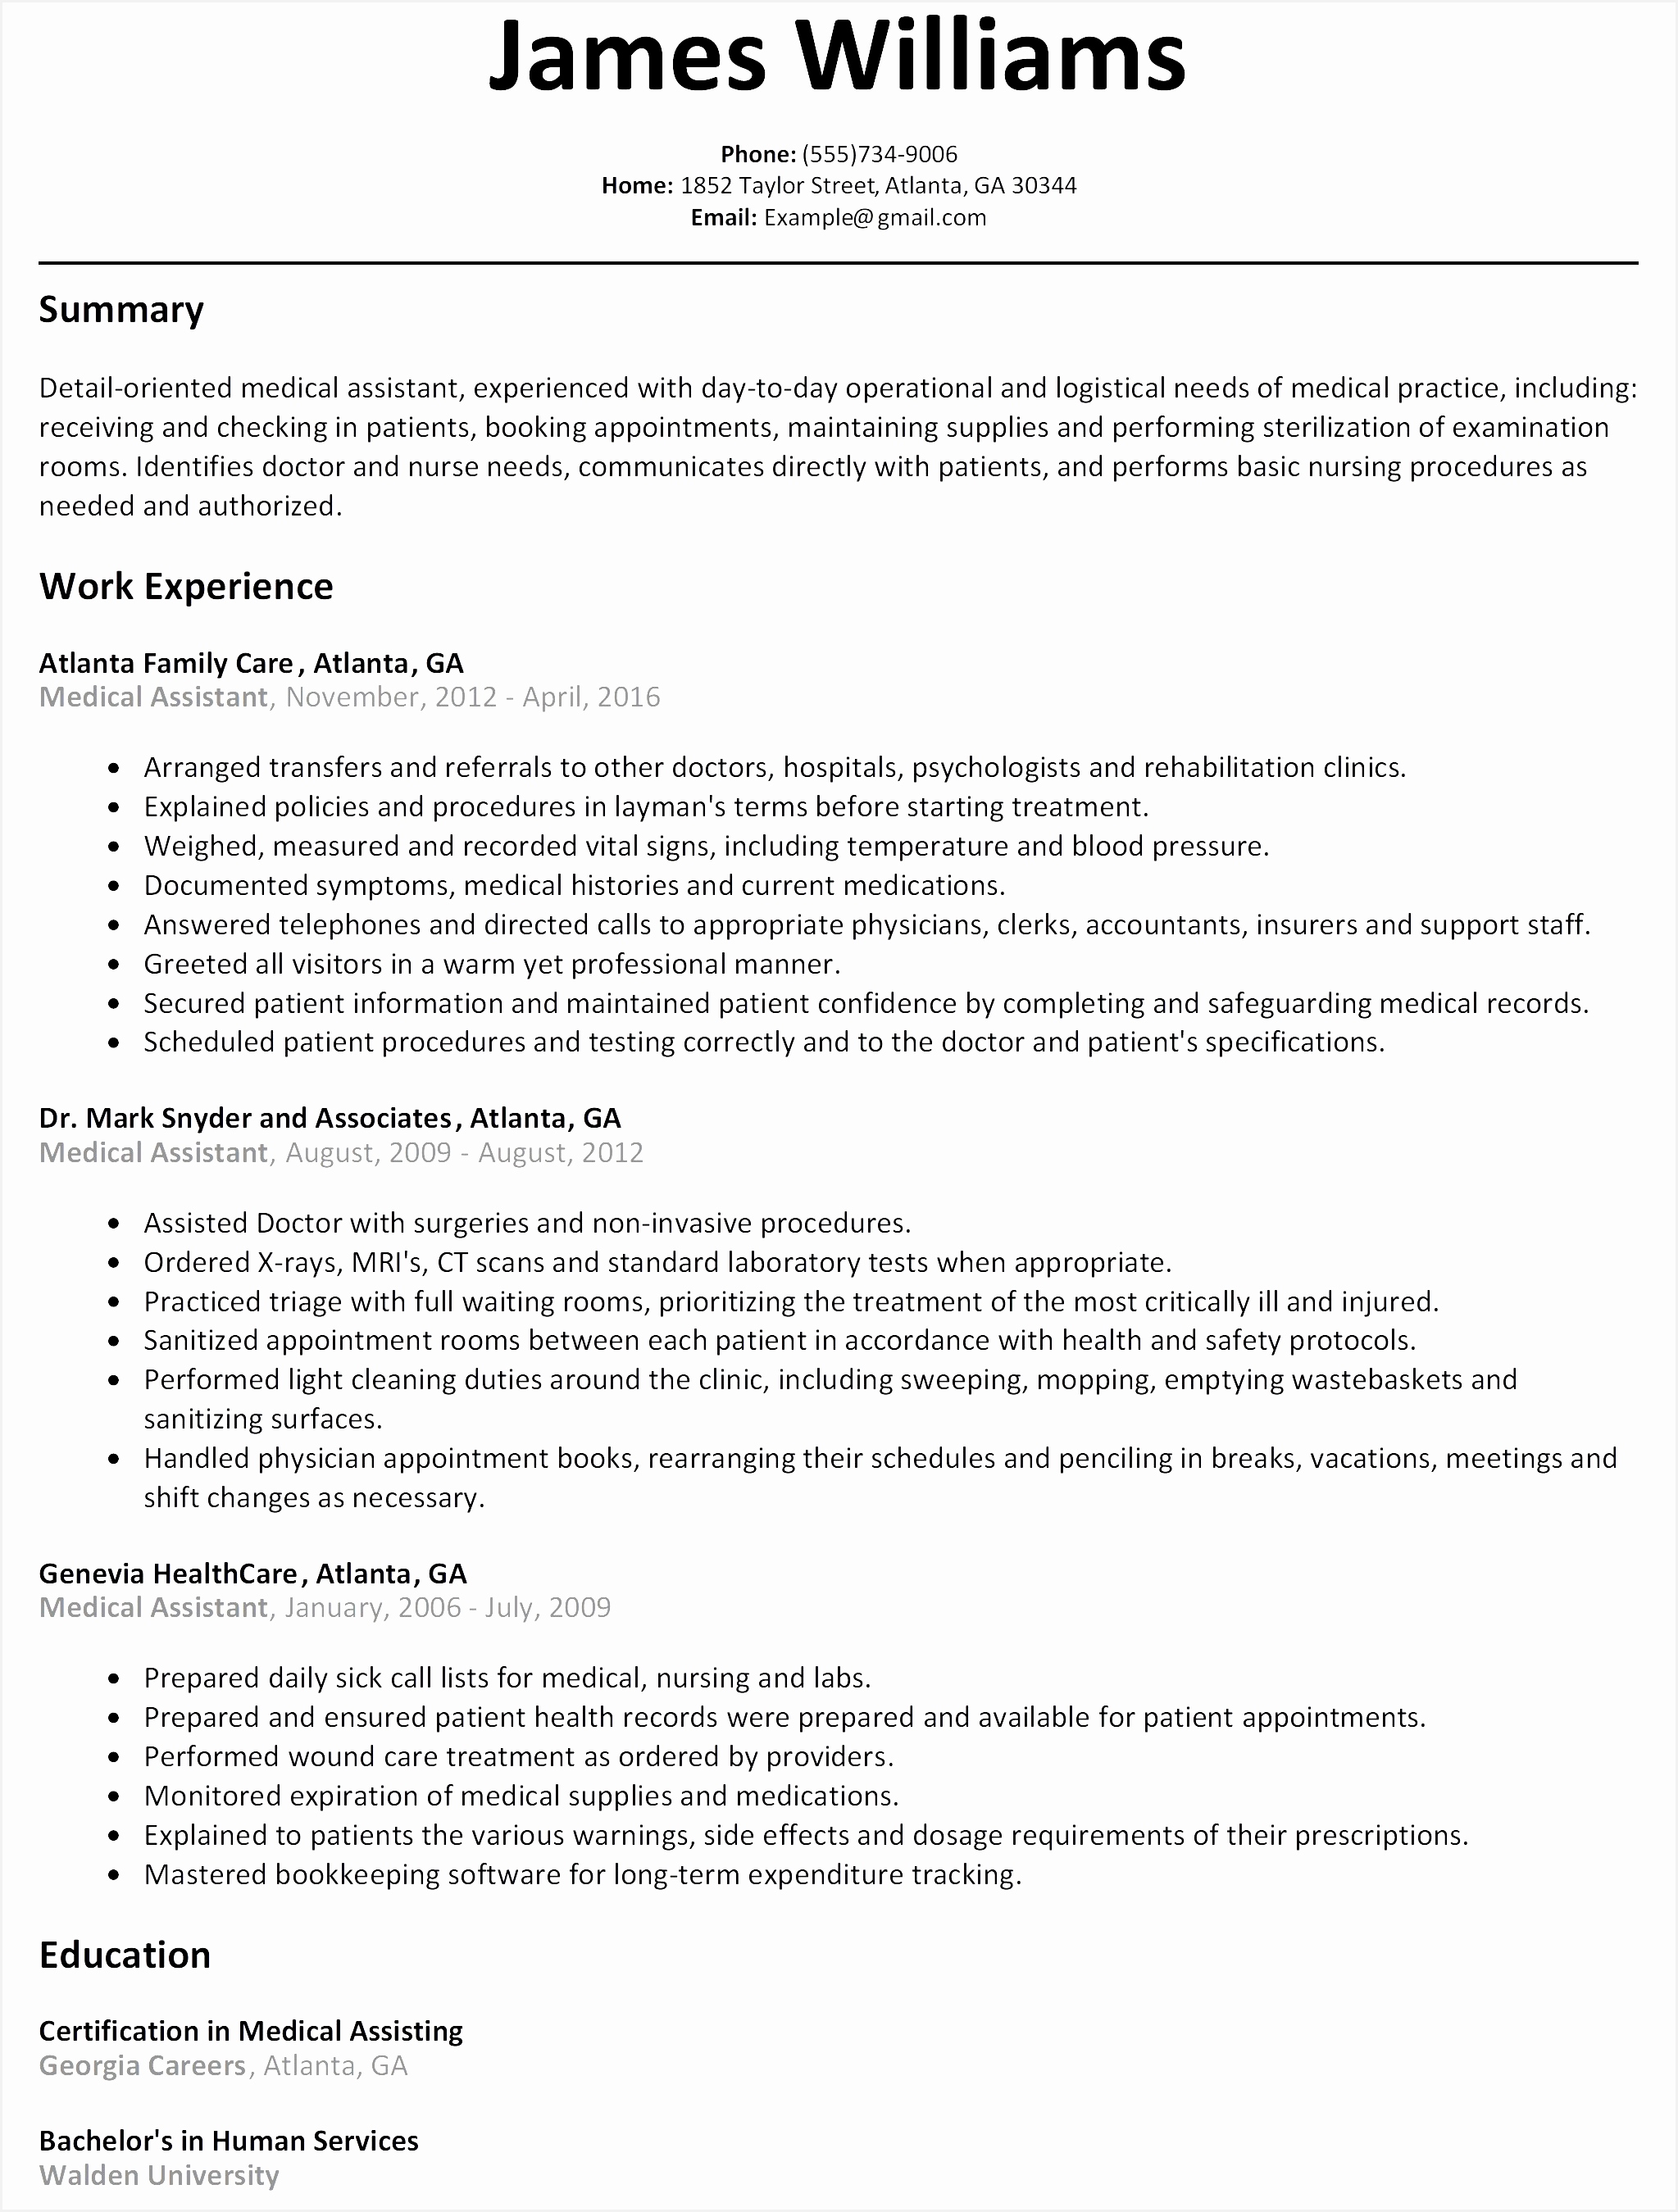 Elegant Microsoft Word Resume Templates Free Best Creative Resume Word Resume Template Free Unique Resume26992047